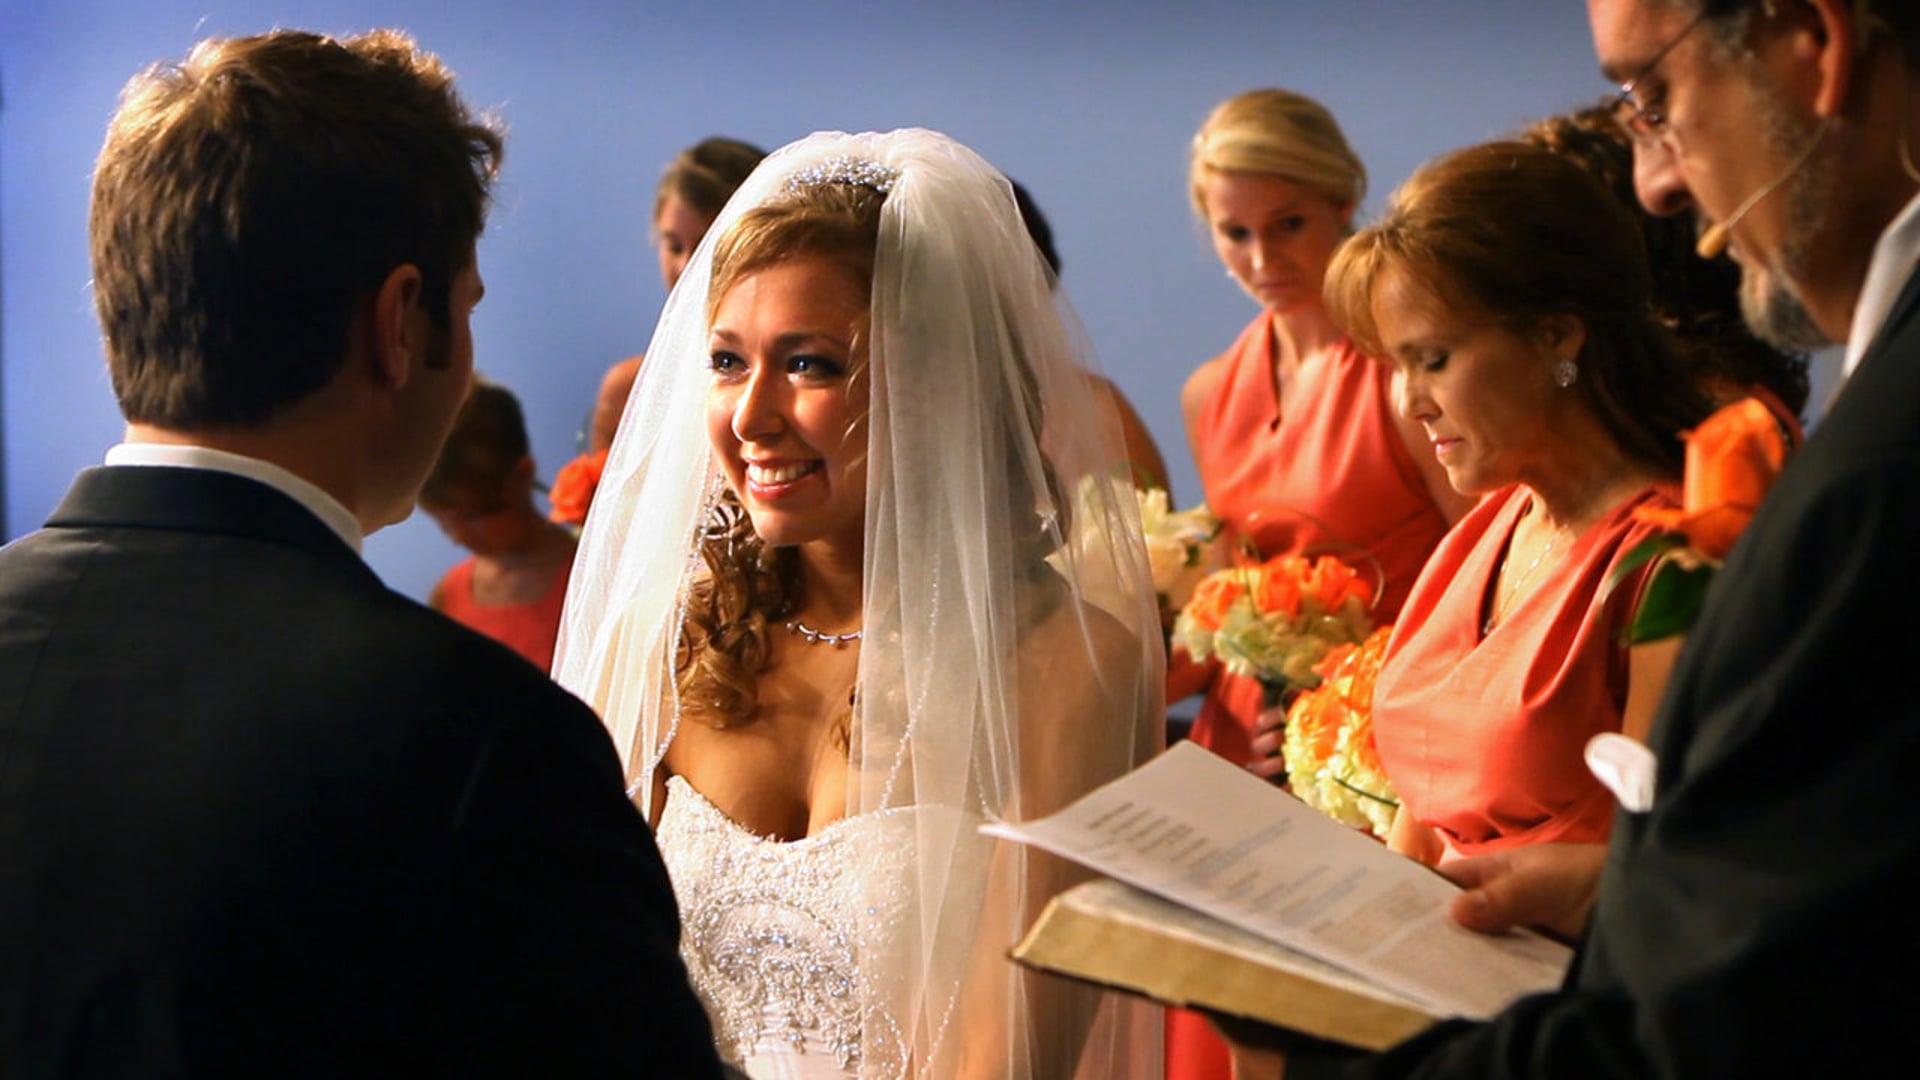 Tony + Aubri :: Love Story Highlight :: Nashville Wedding Videography